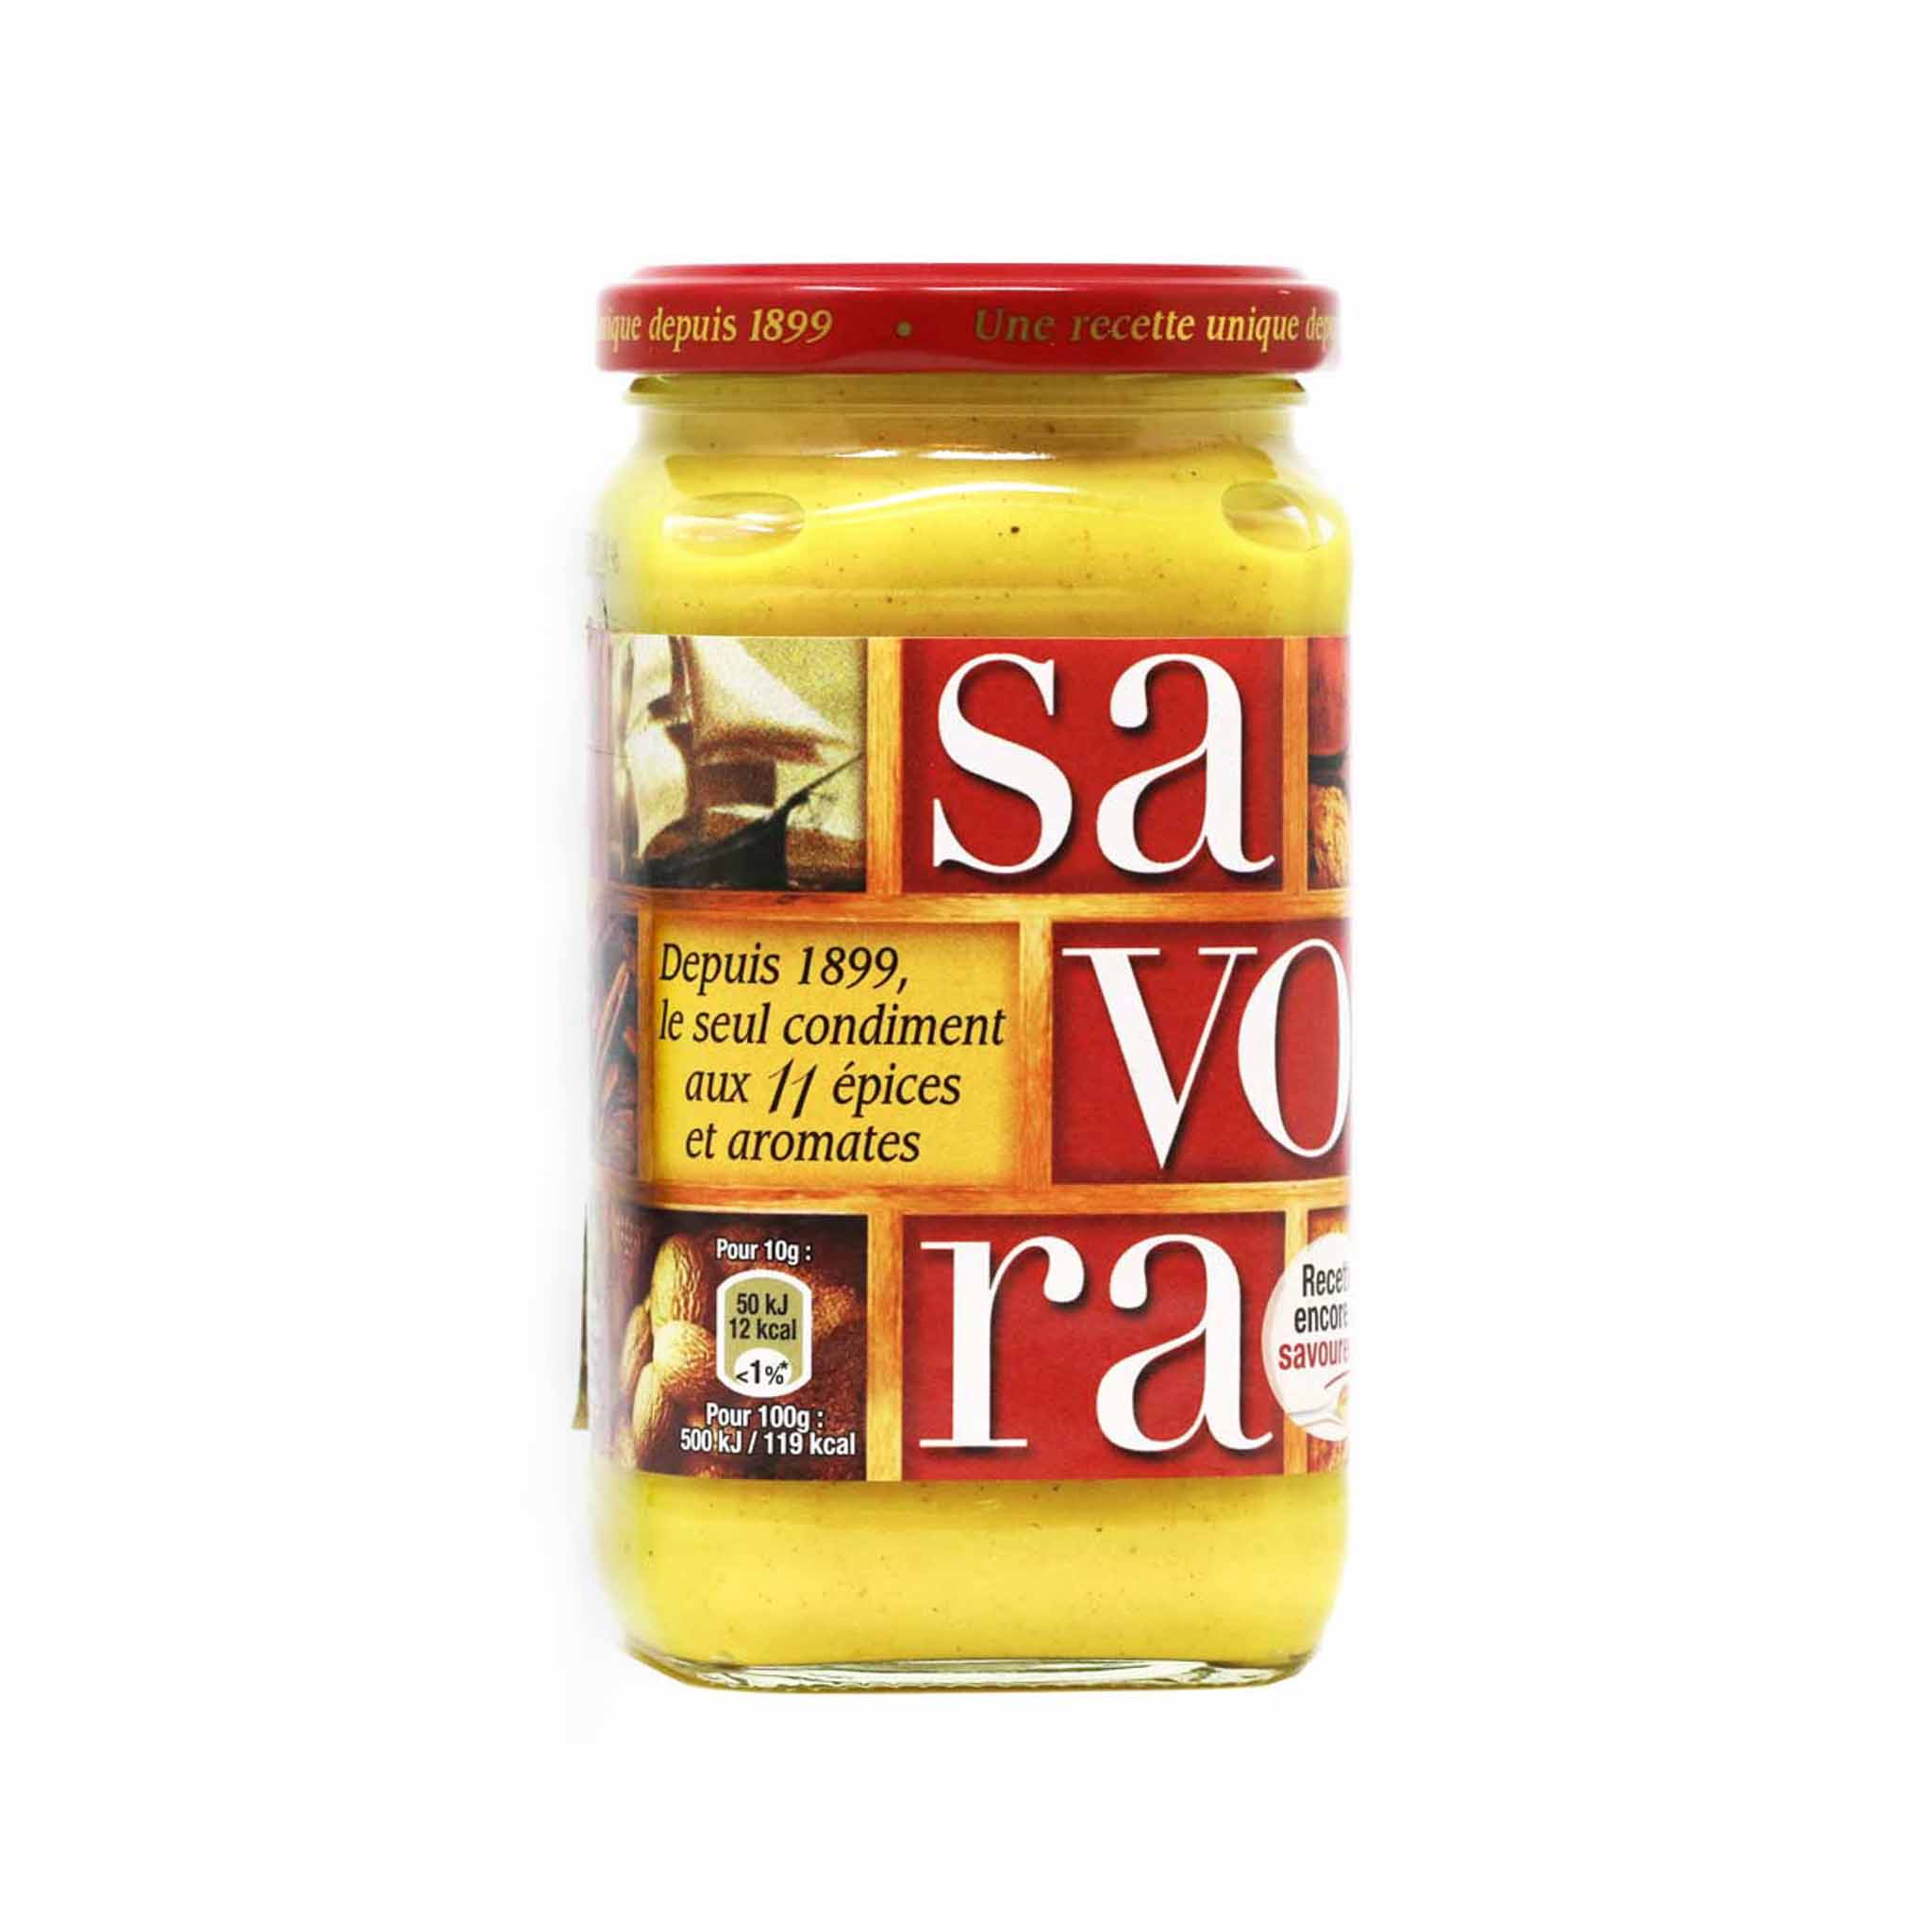 Amora Savora French Mustard in a Glass Jar